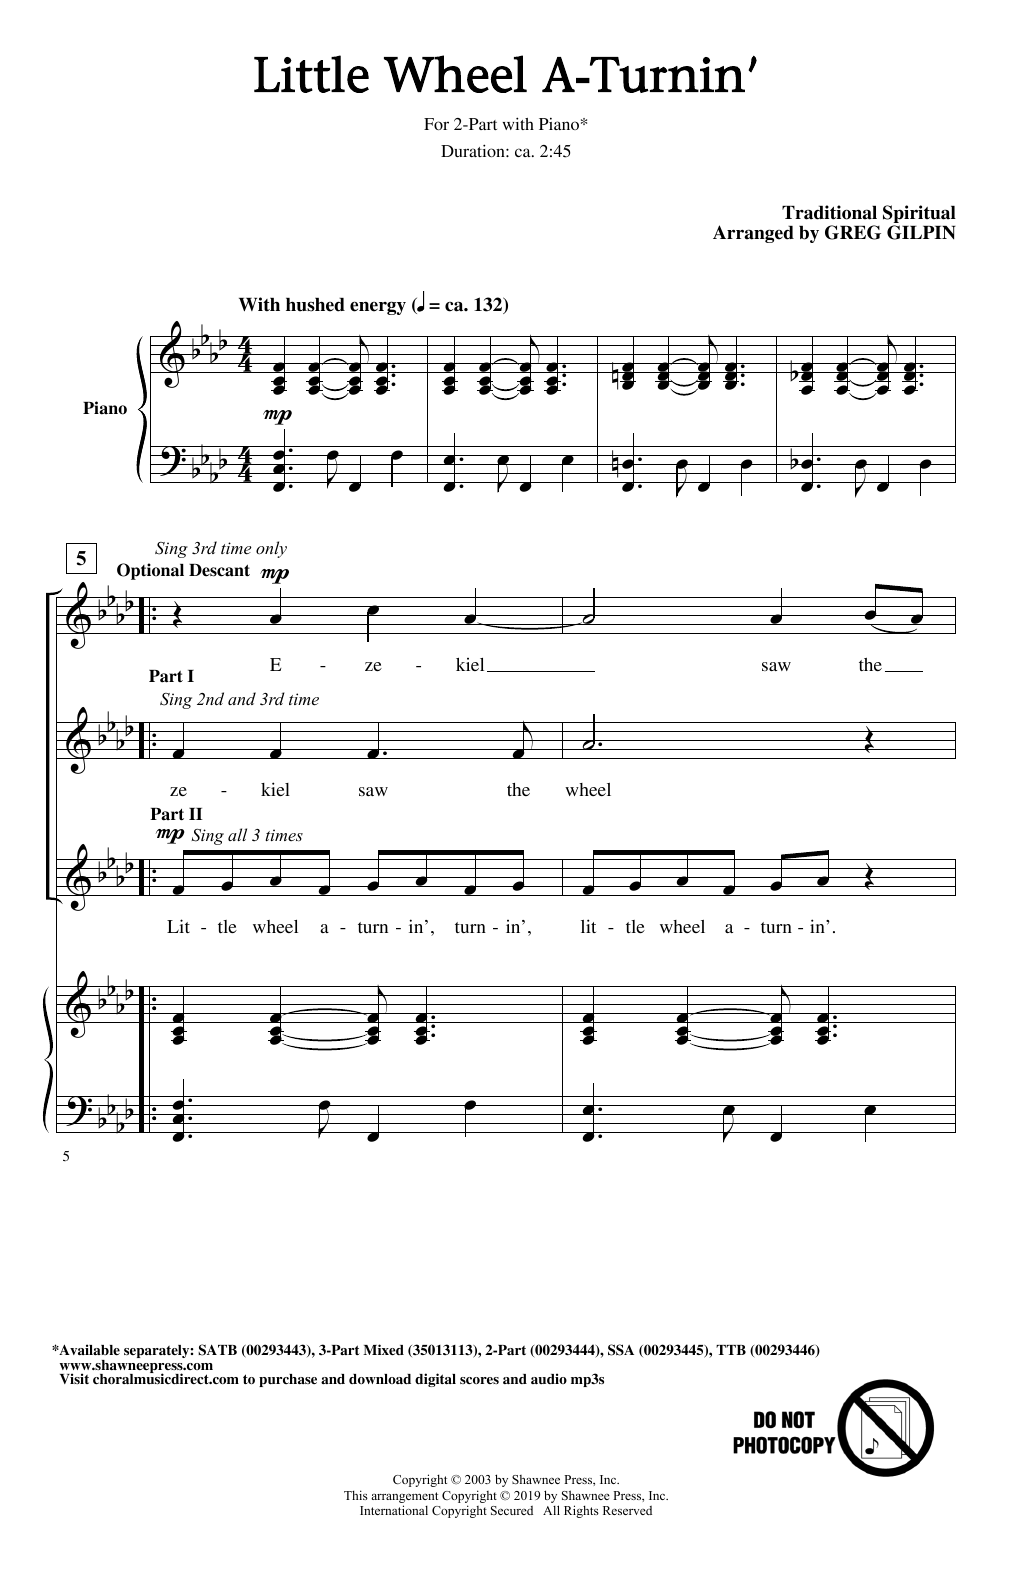 Traditional Spiritual Little Wheel A-Turnin' (arr. Greg Gilpin) Sheet Music Notes & Chords for SATB Choir - Download or Print PDF